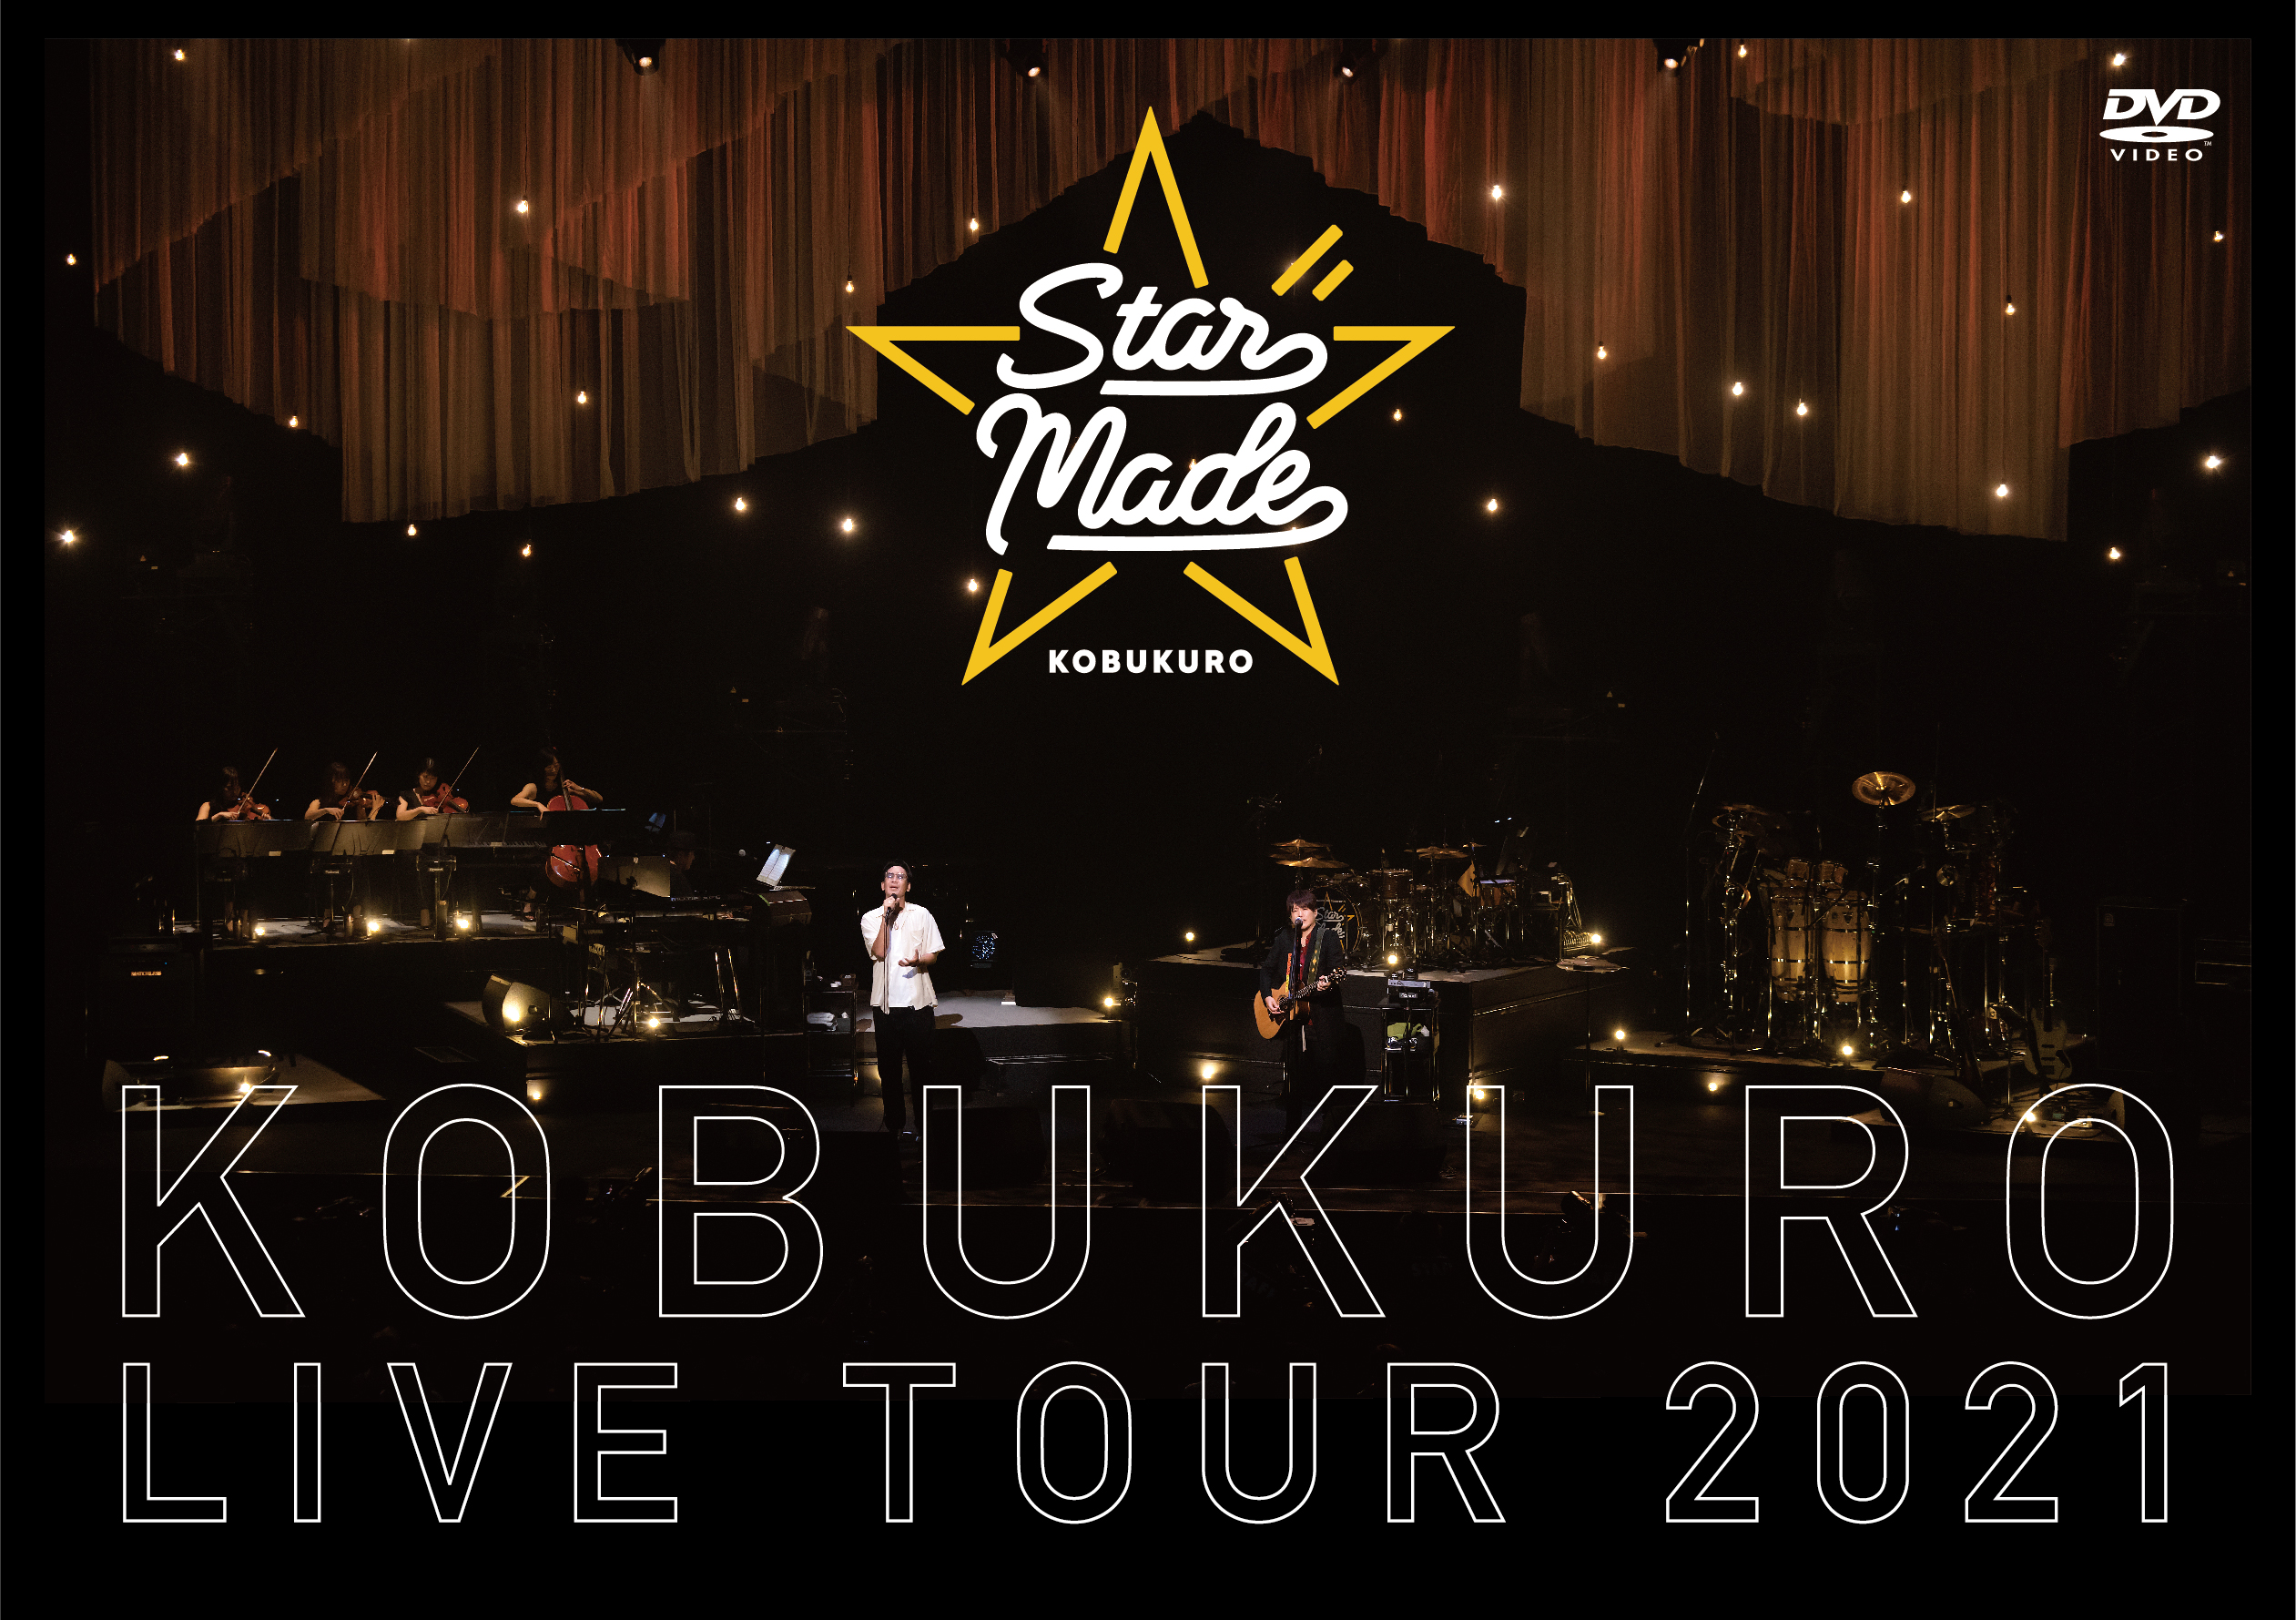 KOBUKURO LIVE TOUR 2021 "Star Made" at 東京ガーデンシアター（通常盤 DVD）